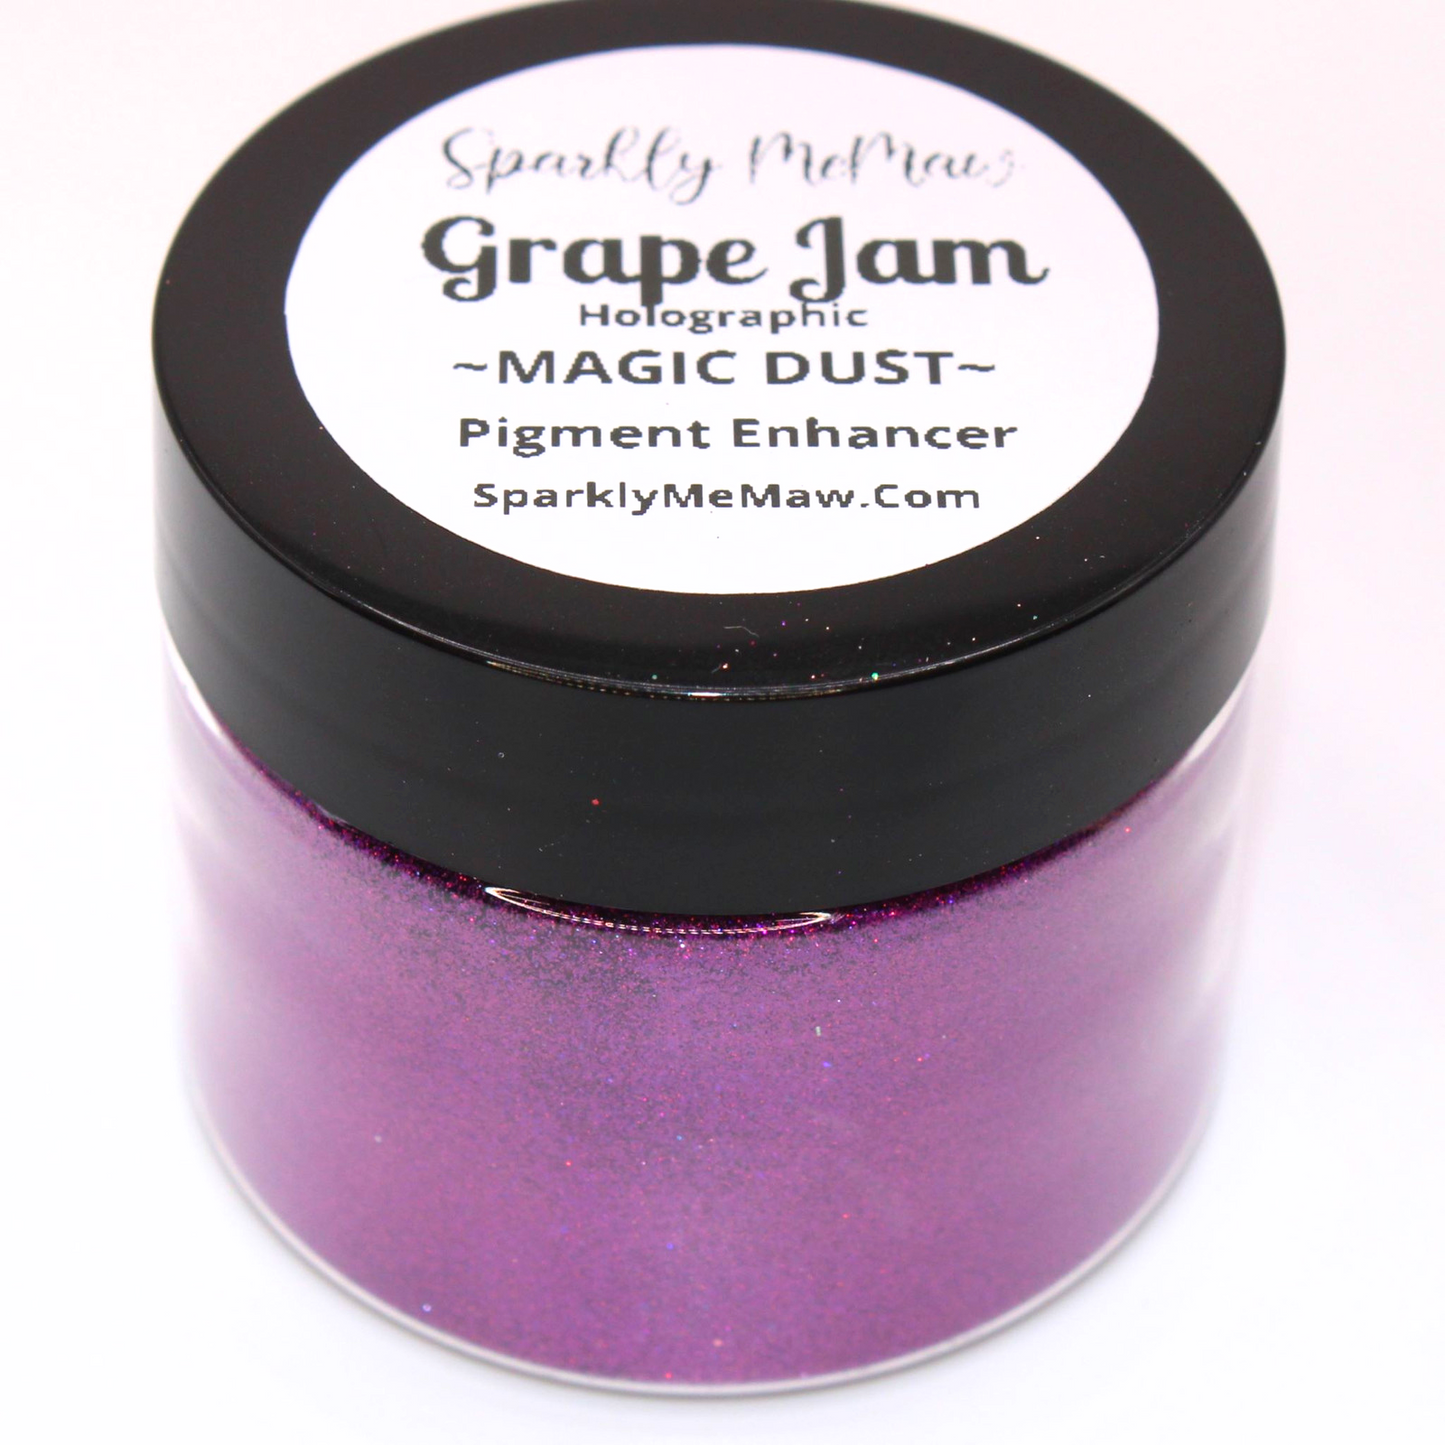 Grape Jam "MeMaws' Magic Dust" Pigment Enhancer